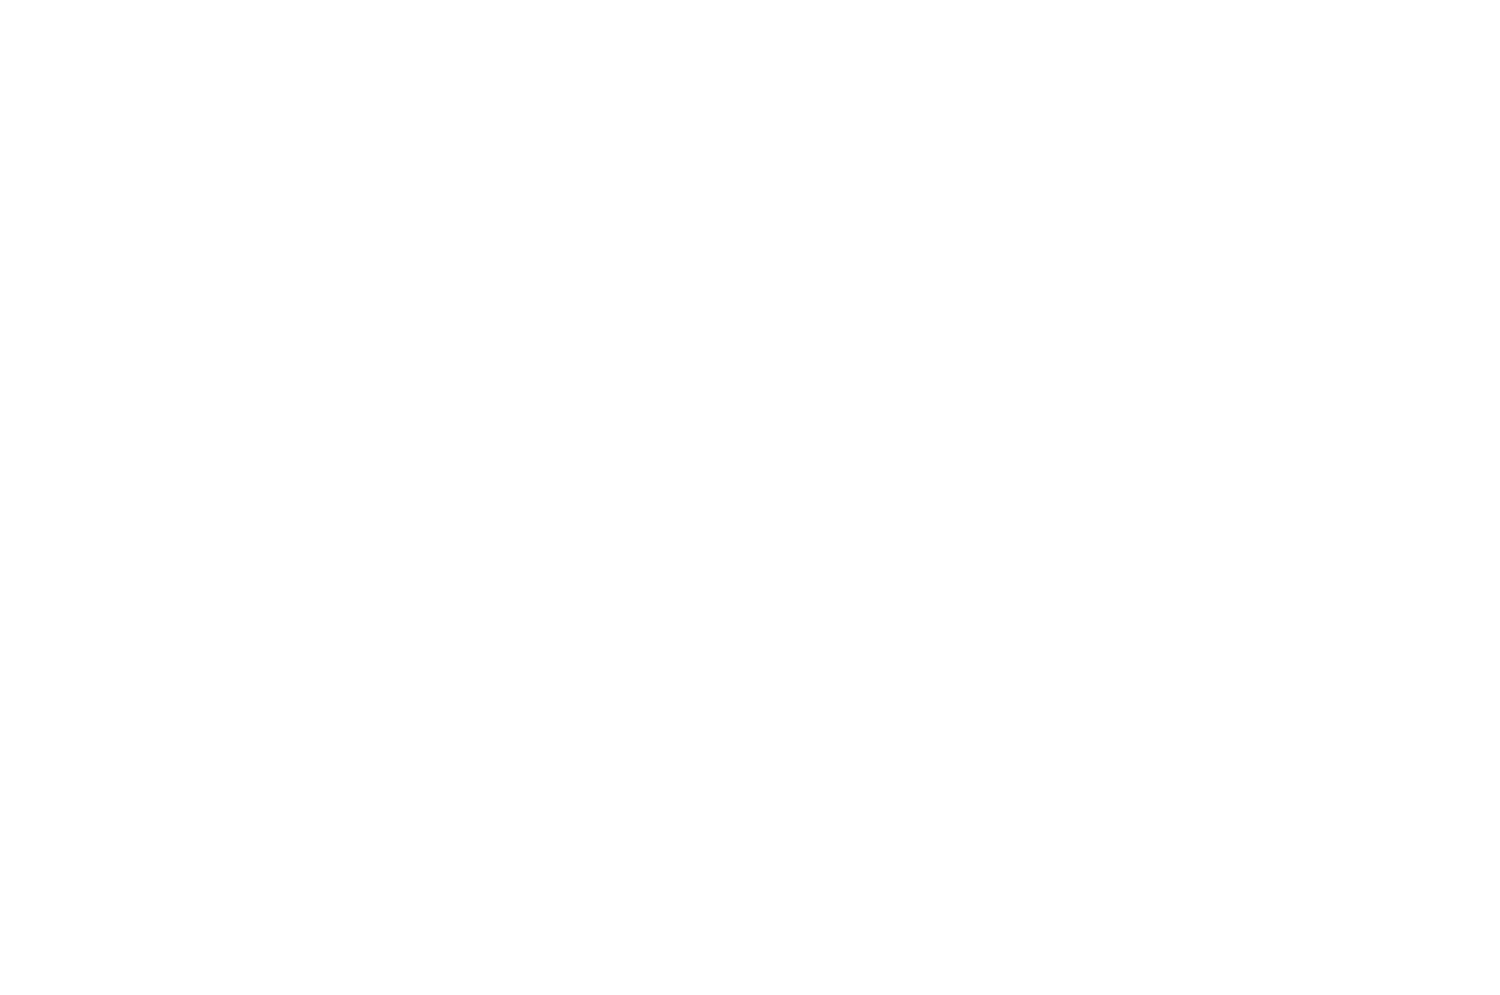 The Last Level